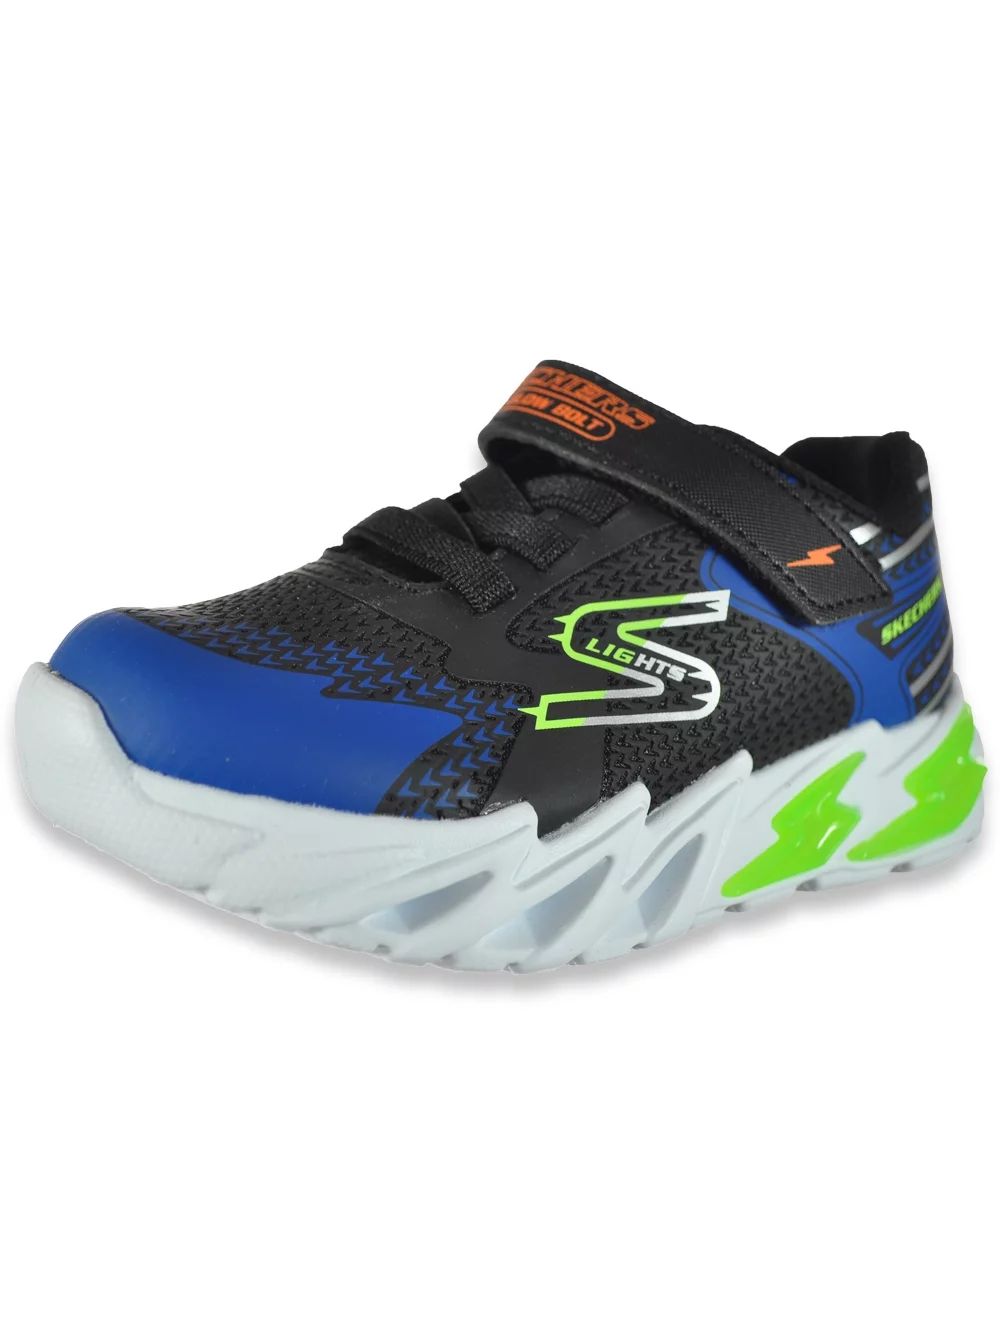 Skechers Boys' Glow Bolt Light-Up Sneakers - Black/Blue, 10 Toddler | Walmart (US)